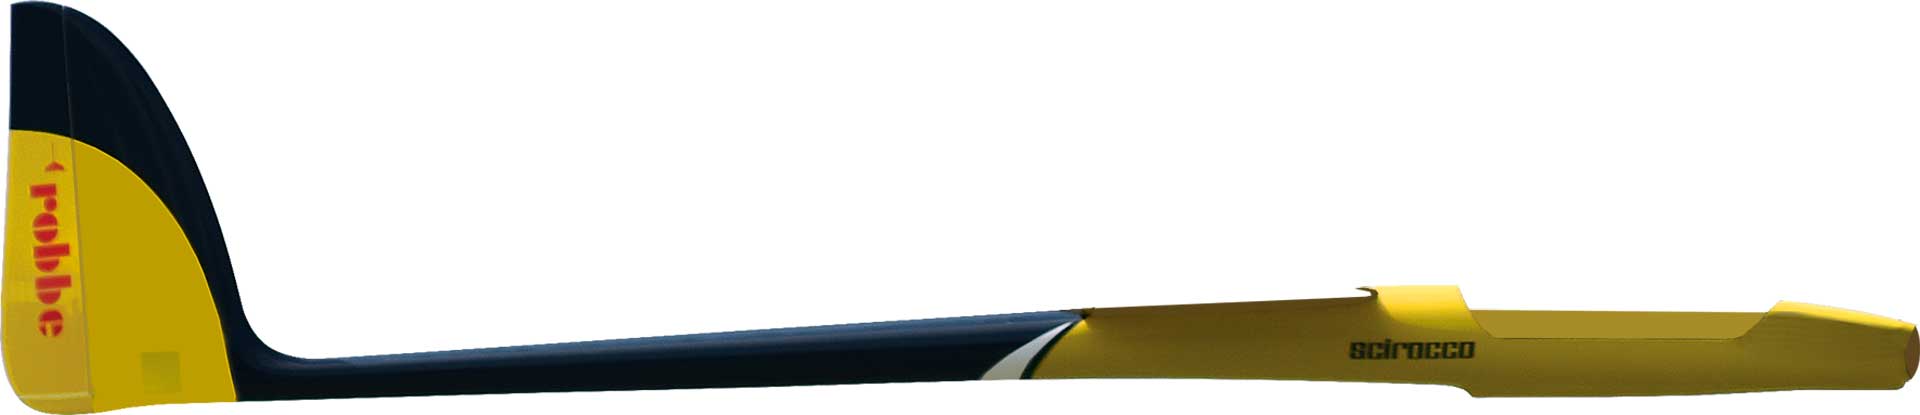 Robbe Modellsport Fuselage SCIROCCO L 4,0M PNP incl. servos for elevator and rudder